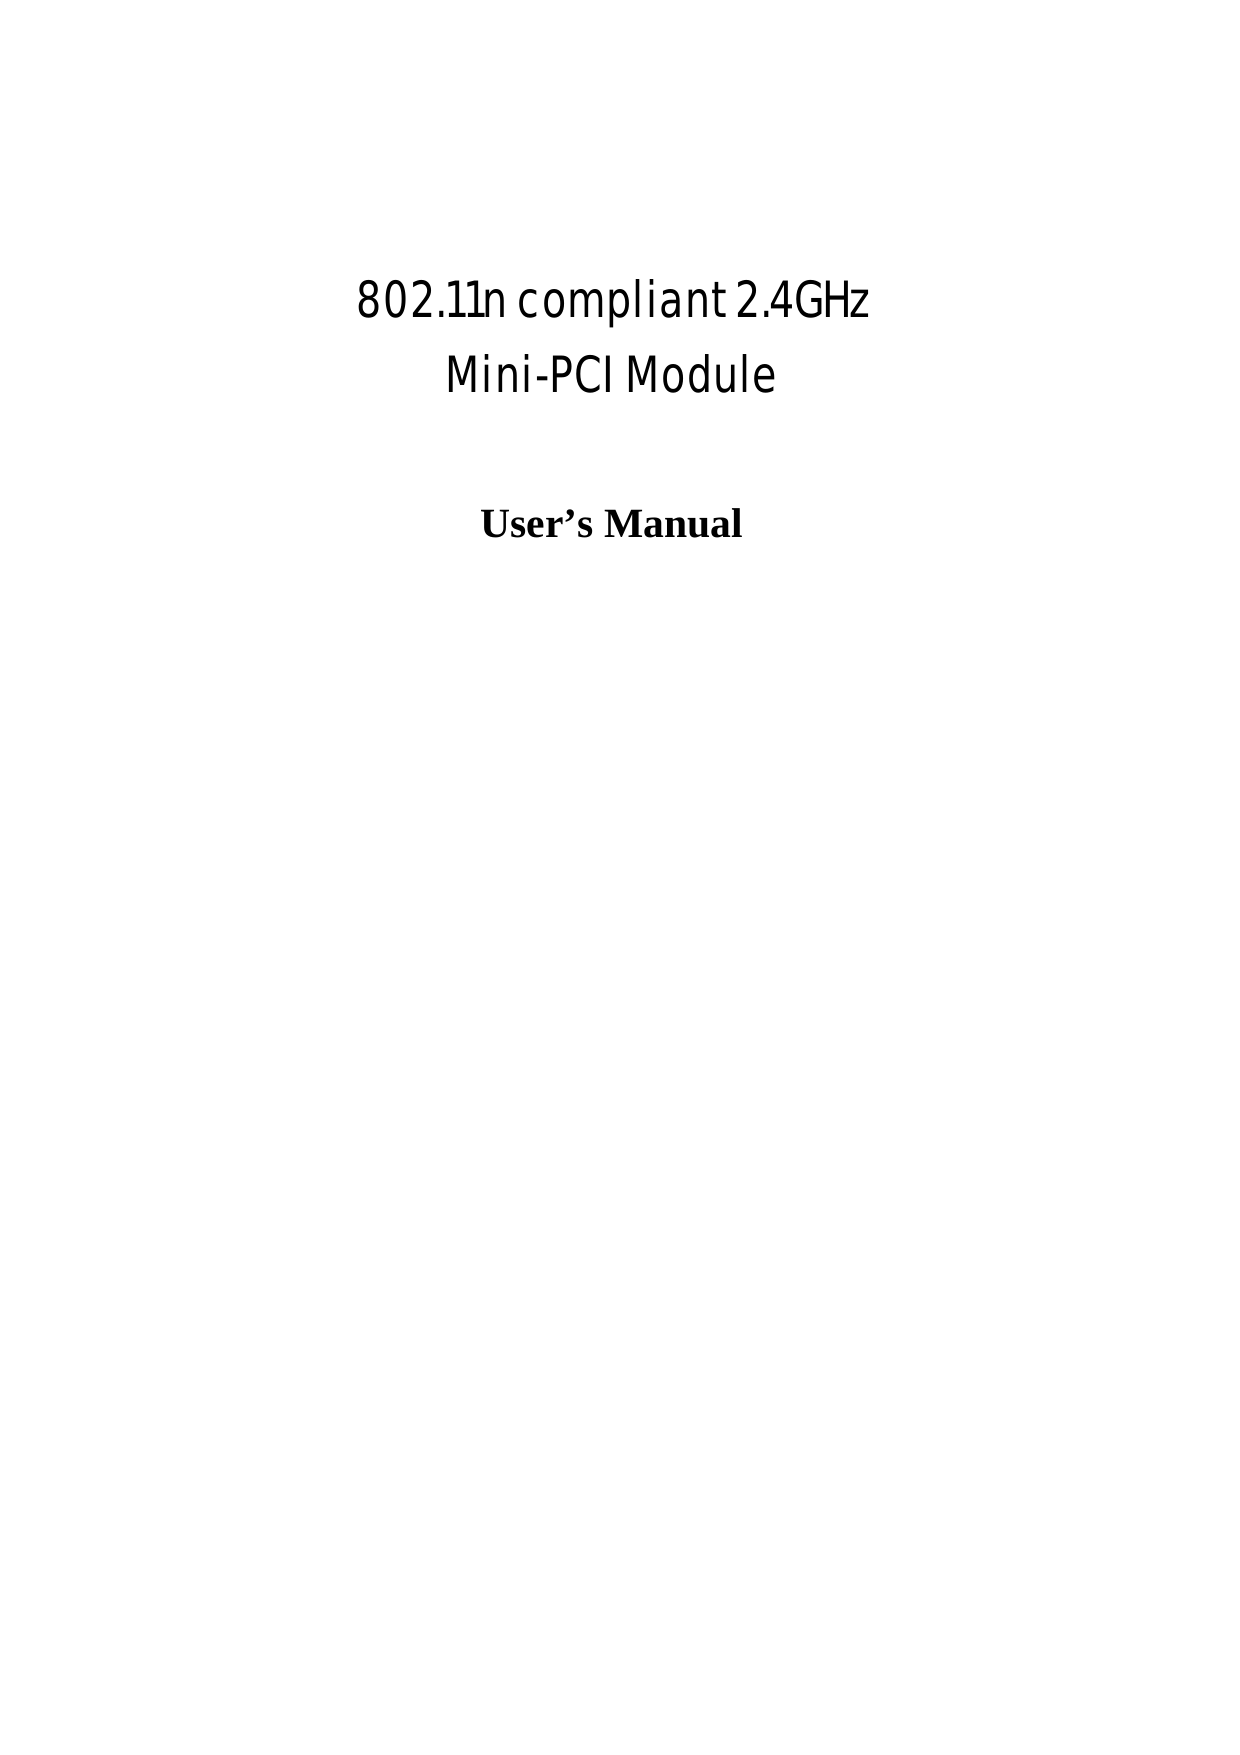     802.11n compliant 2.4GHz Mini-PCI Module  User’s Manual 